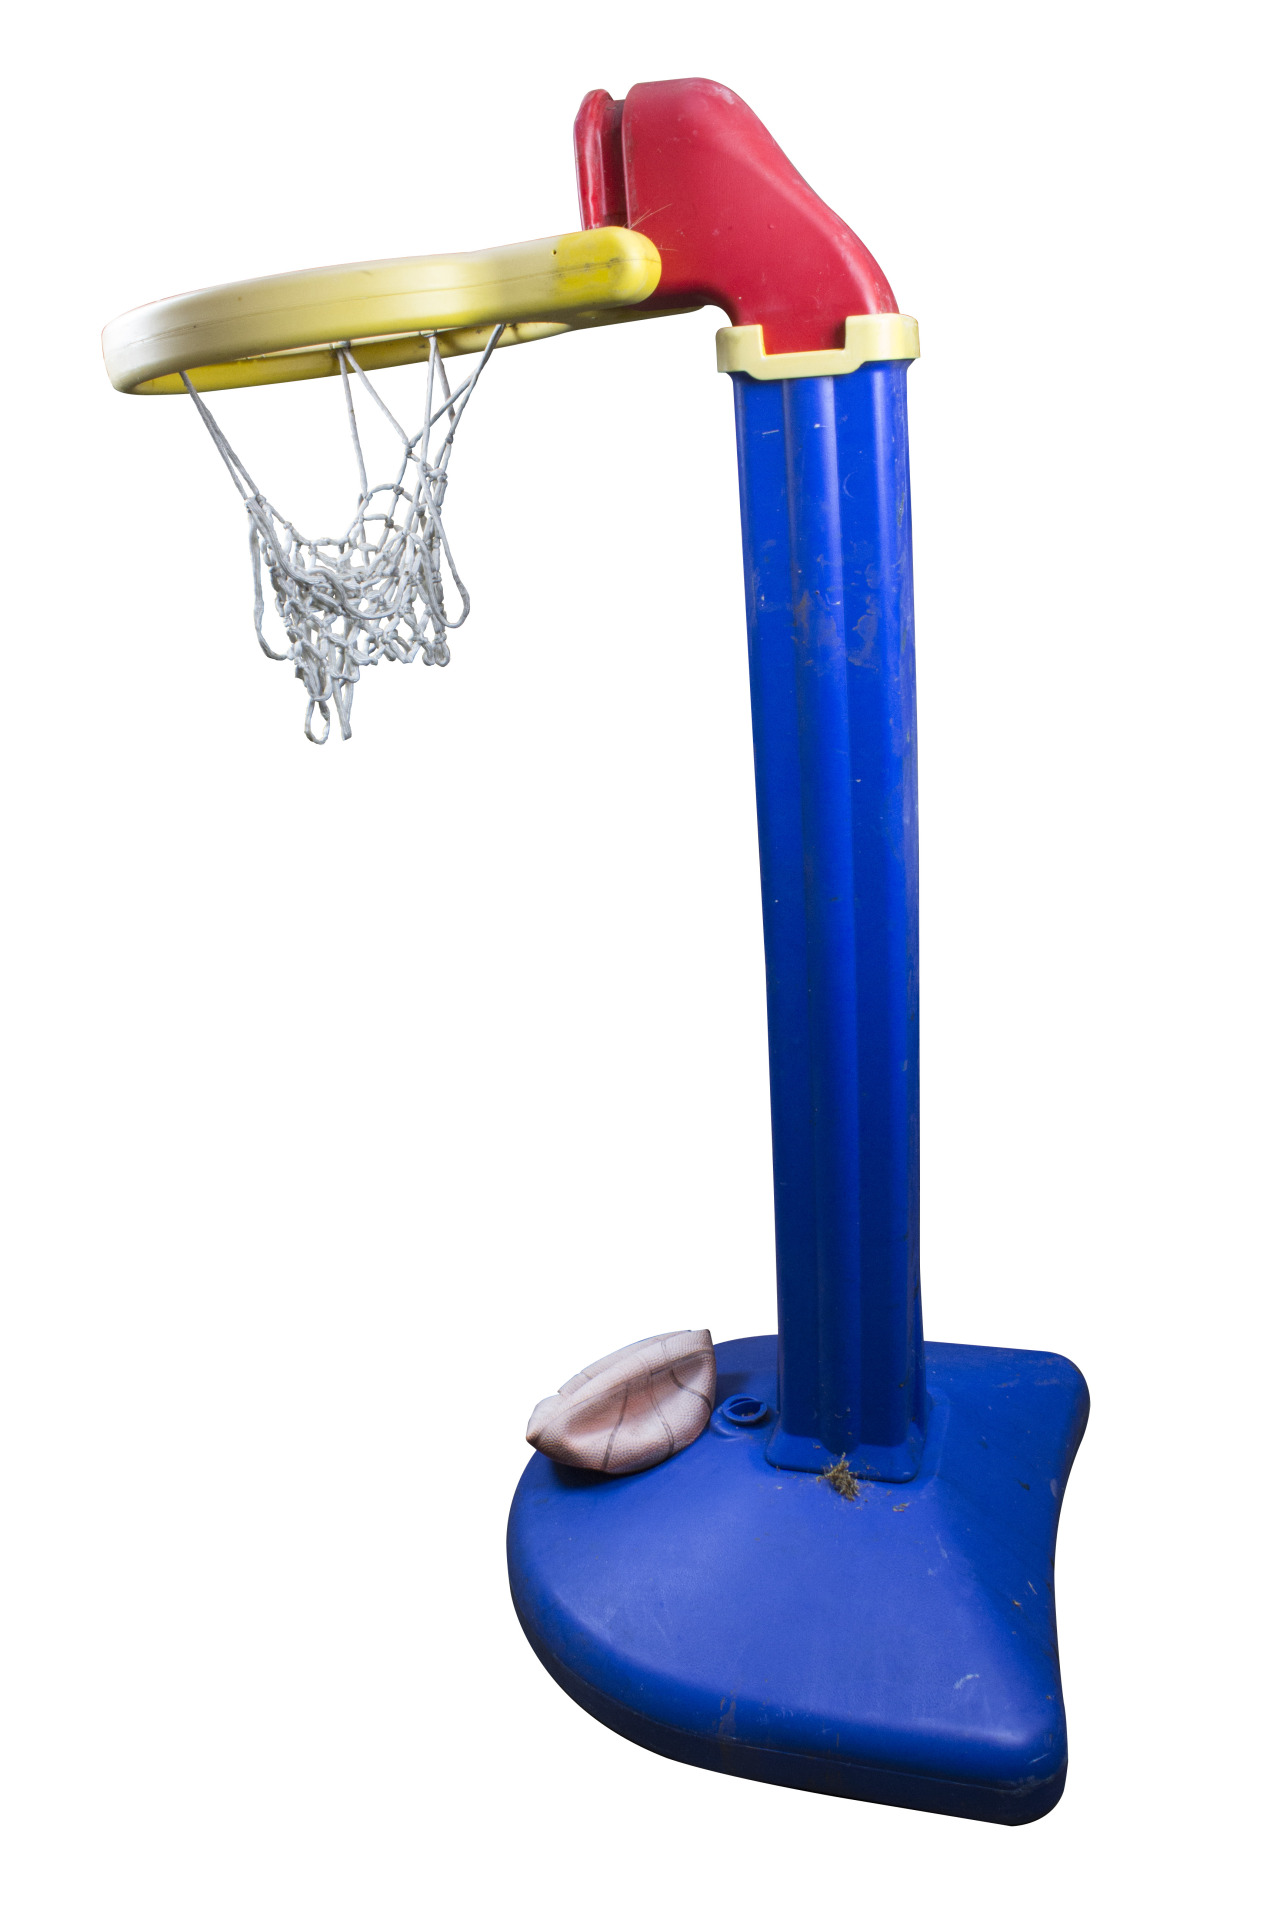 little tikes basketball hoop walmart